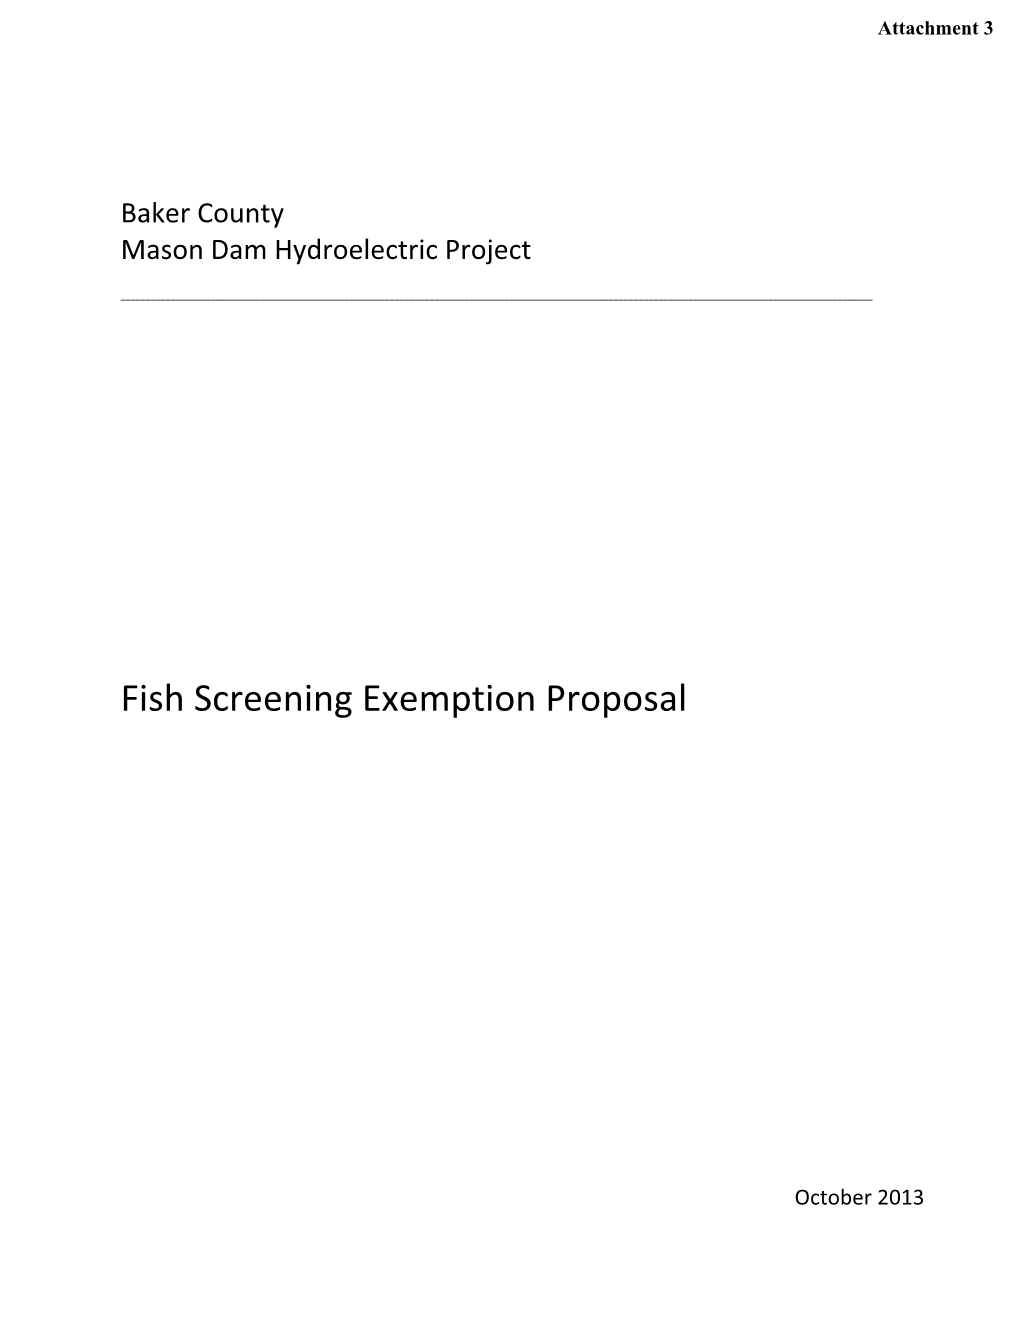 Fish Screening Exemption Proposal